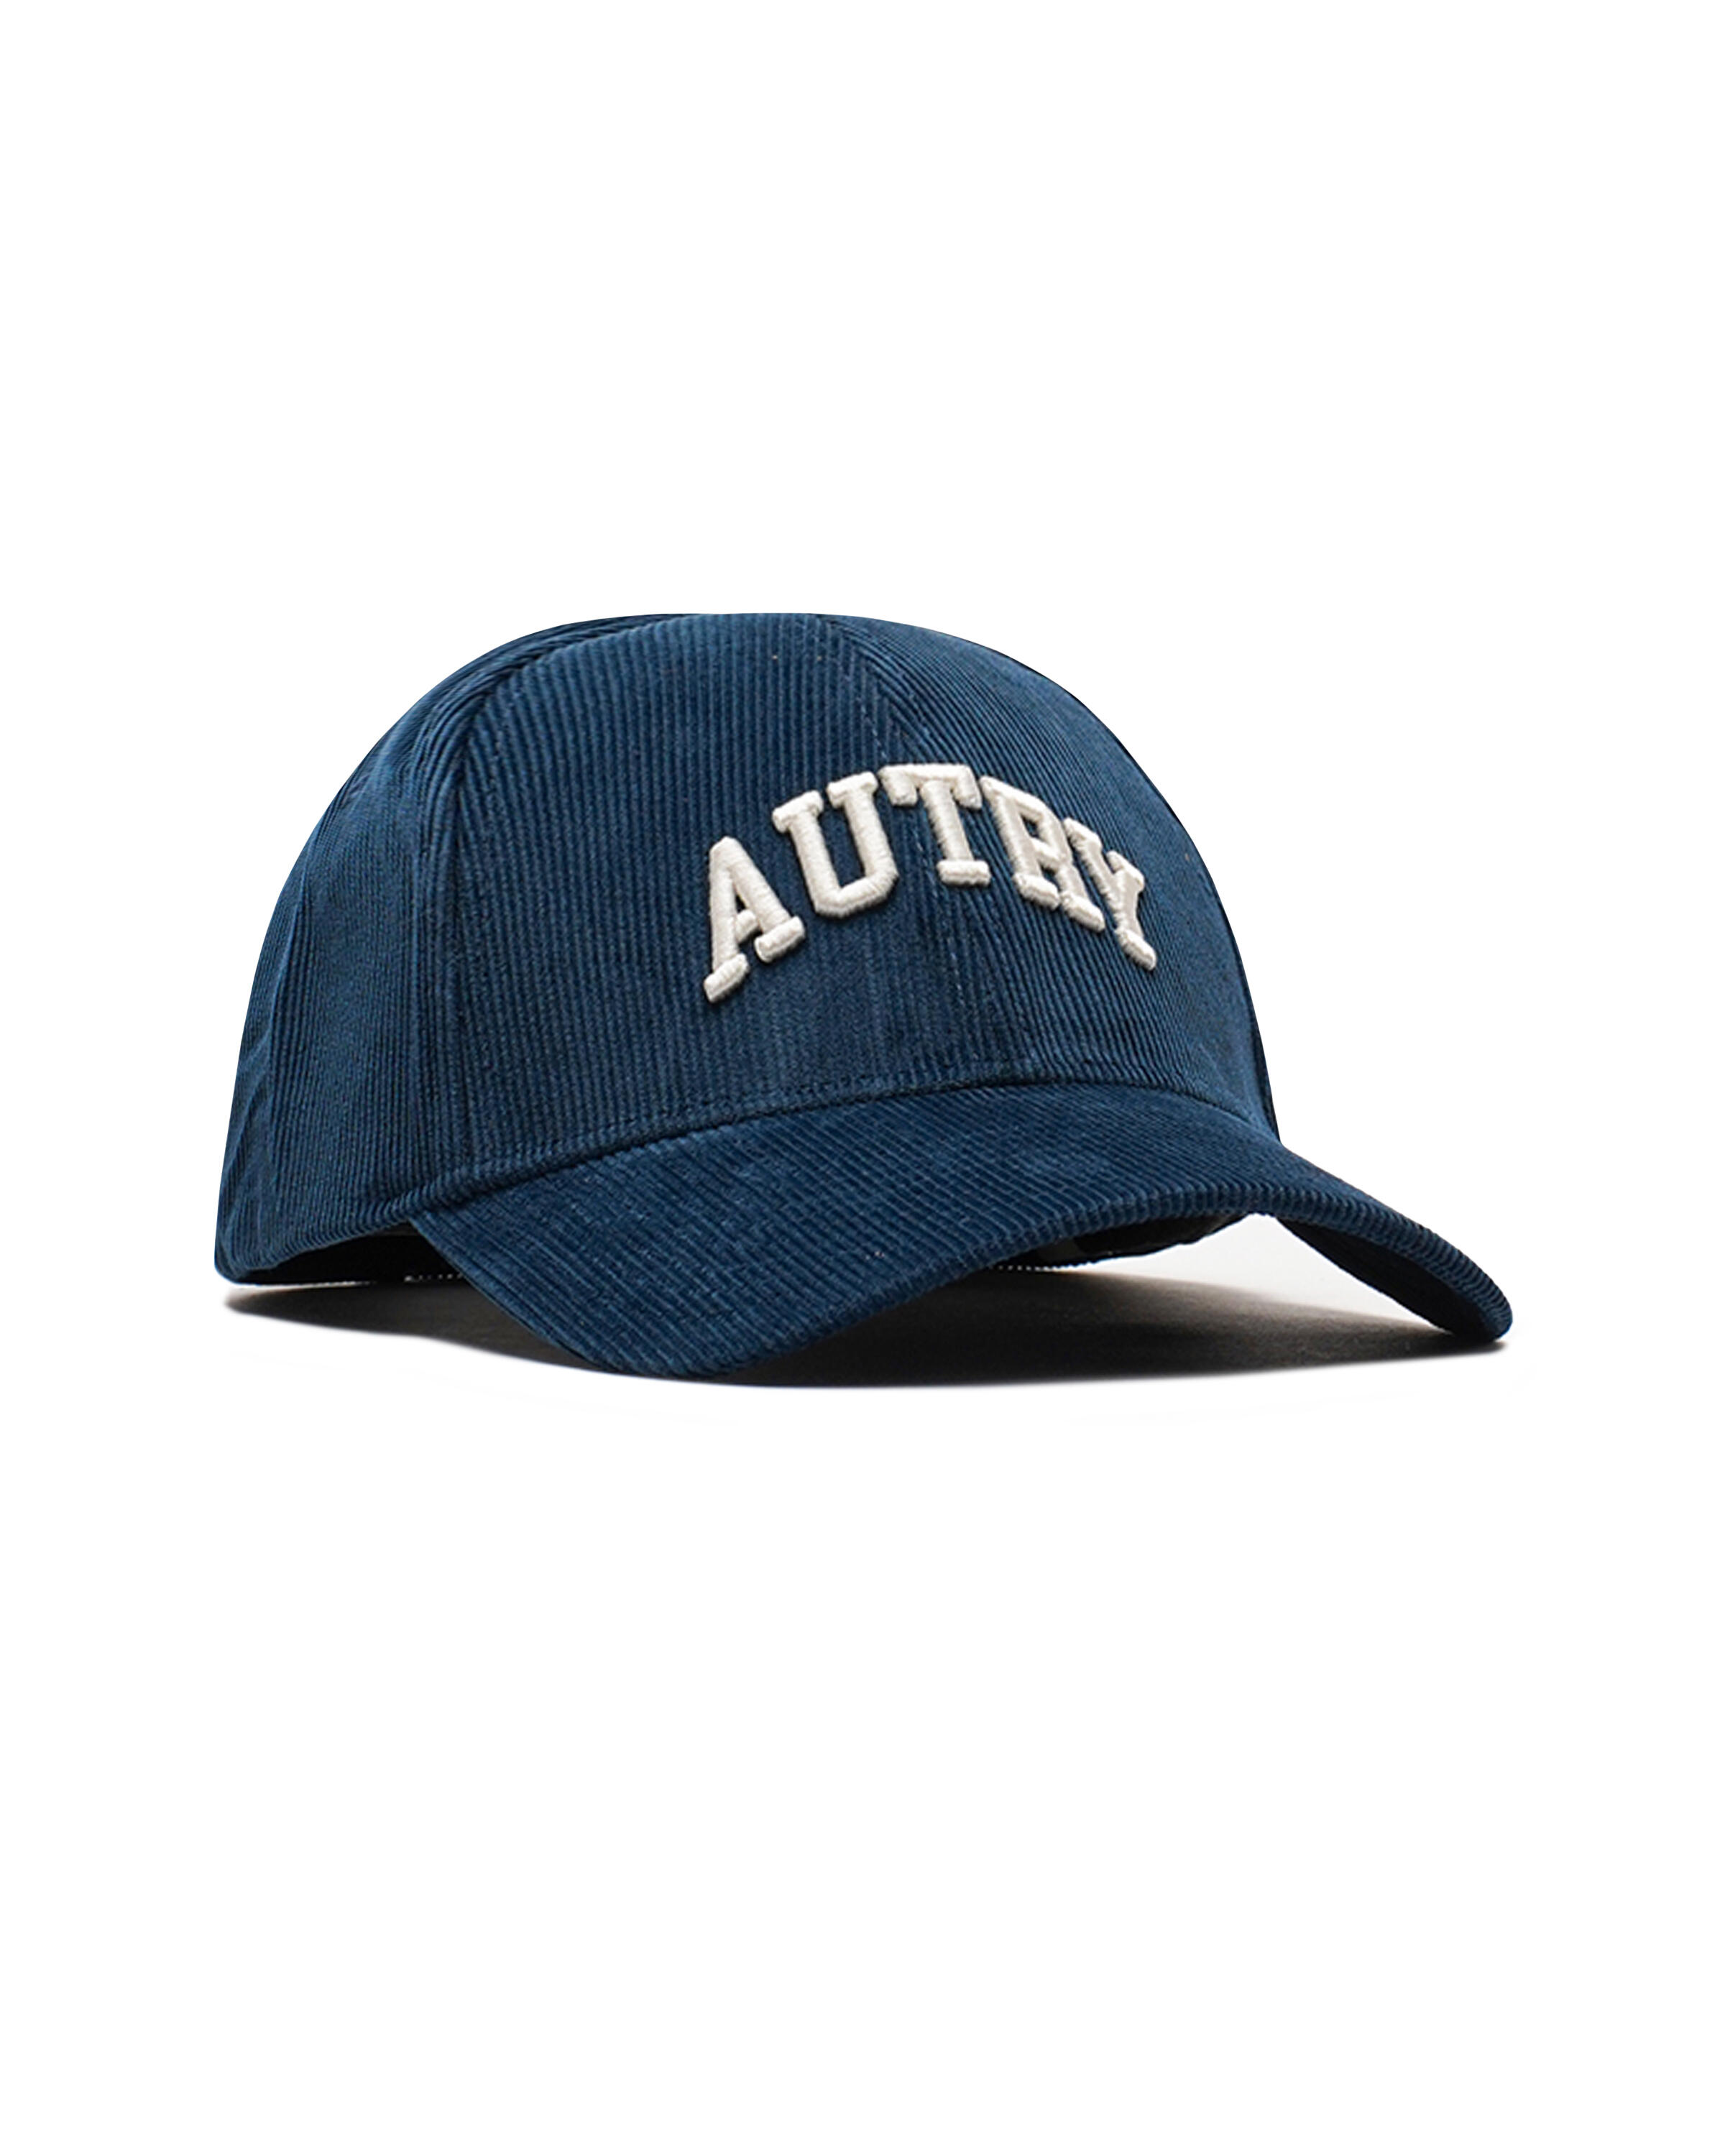 Autry Action Shoes BASEBALL CAP